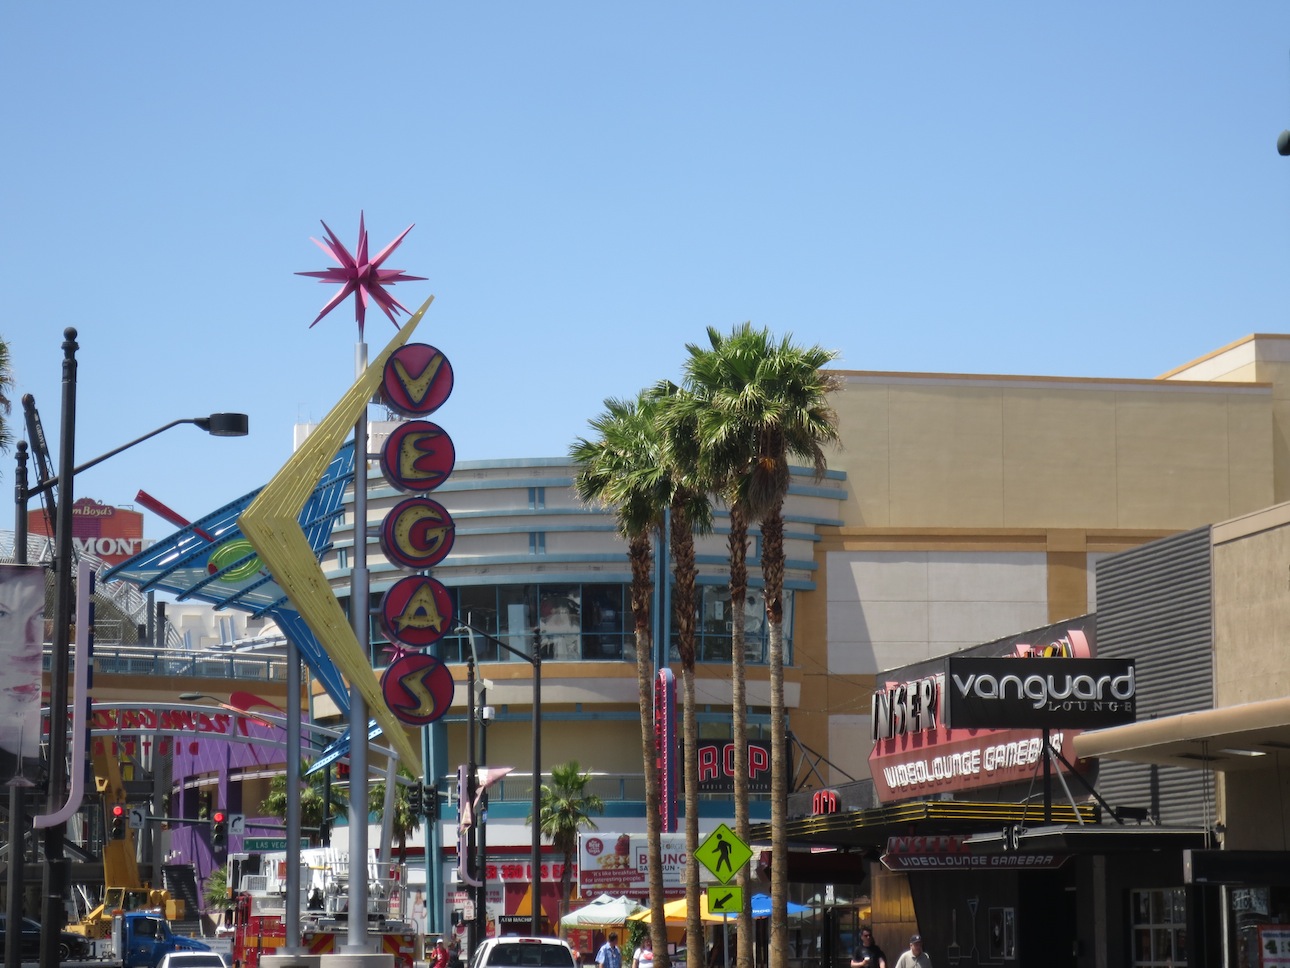 The original Las Vegas strip sign